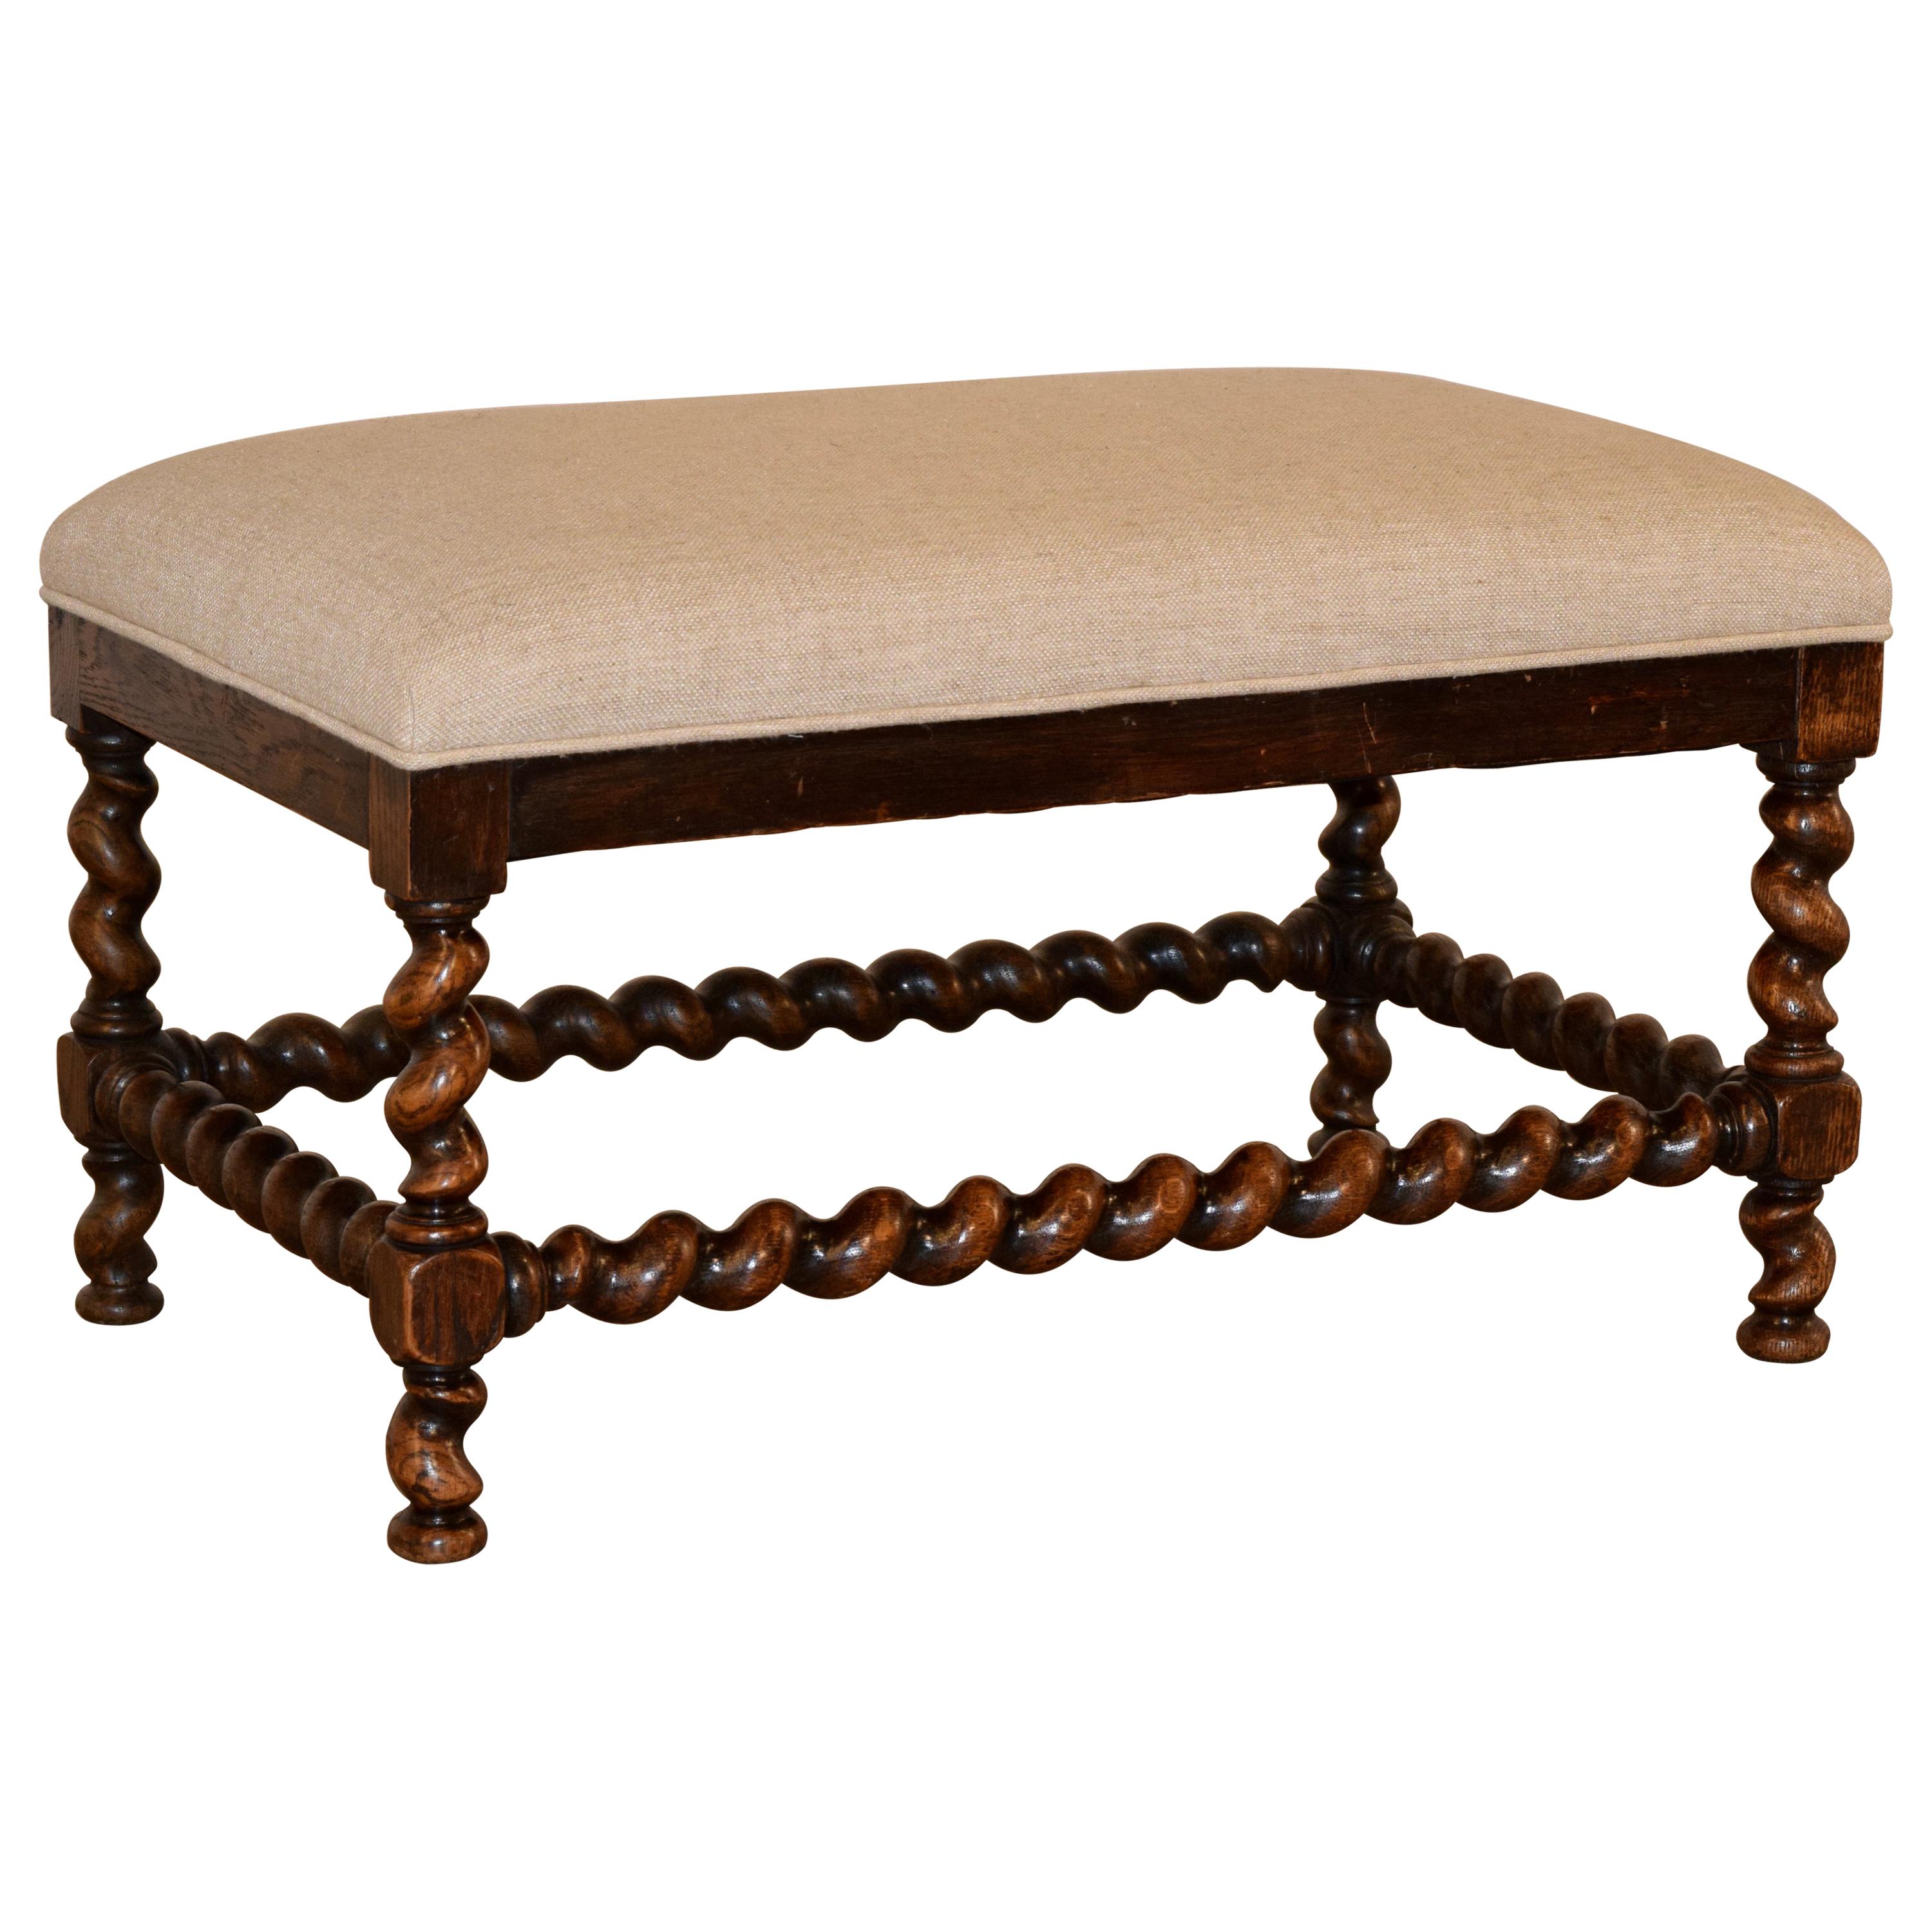 19th Century English Oak Upholstered Bench